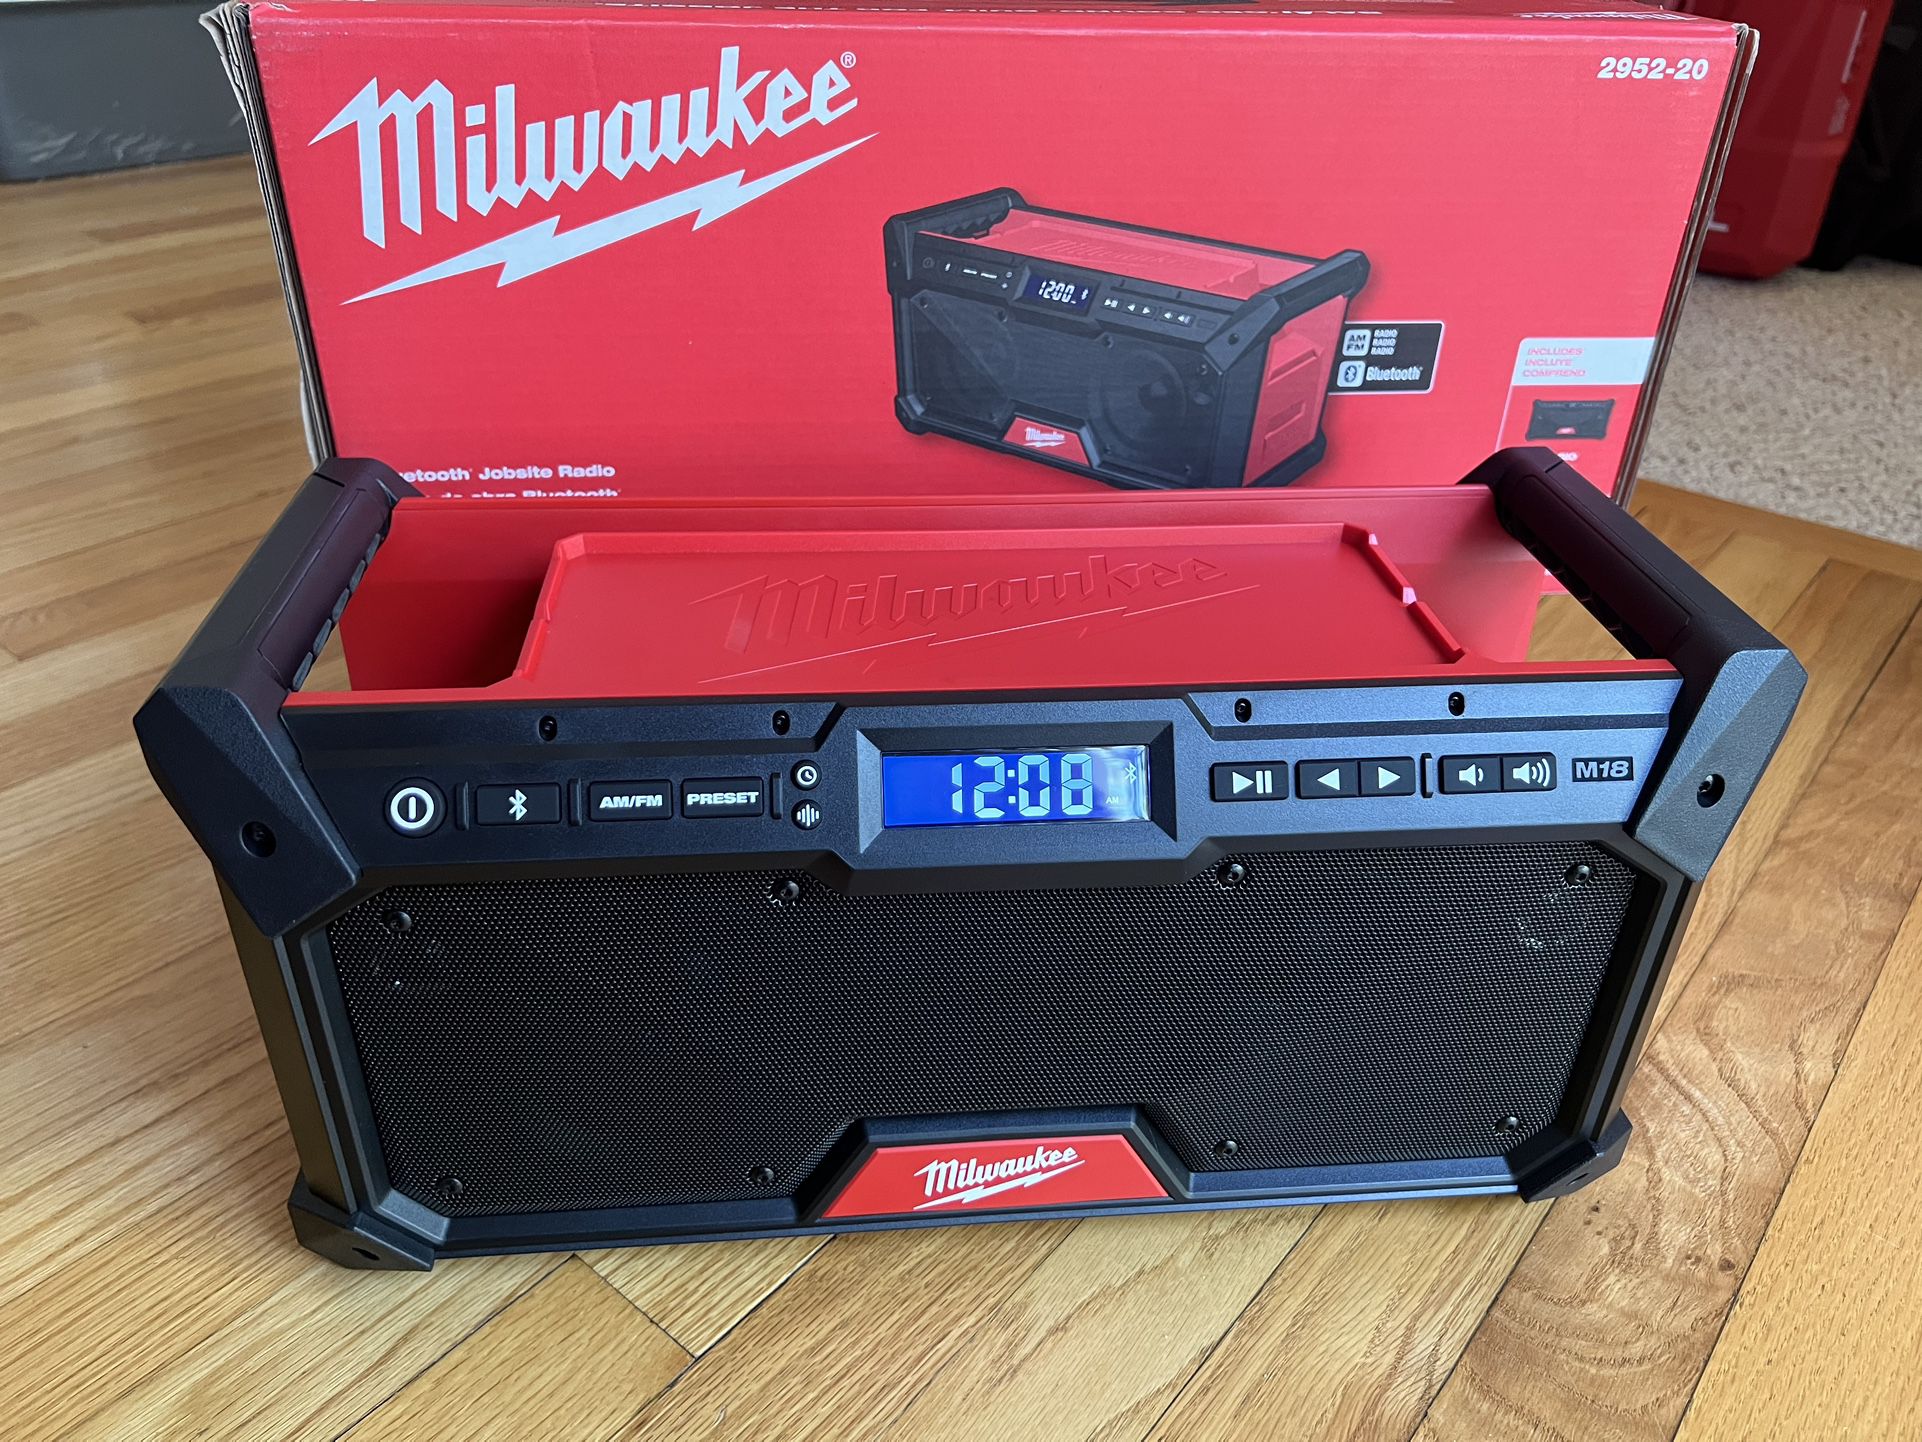 *NEW* Milwaukee M18 Job Site Radio & Bluetooth Speaker (Tool Only)